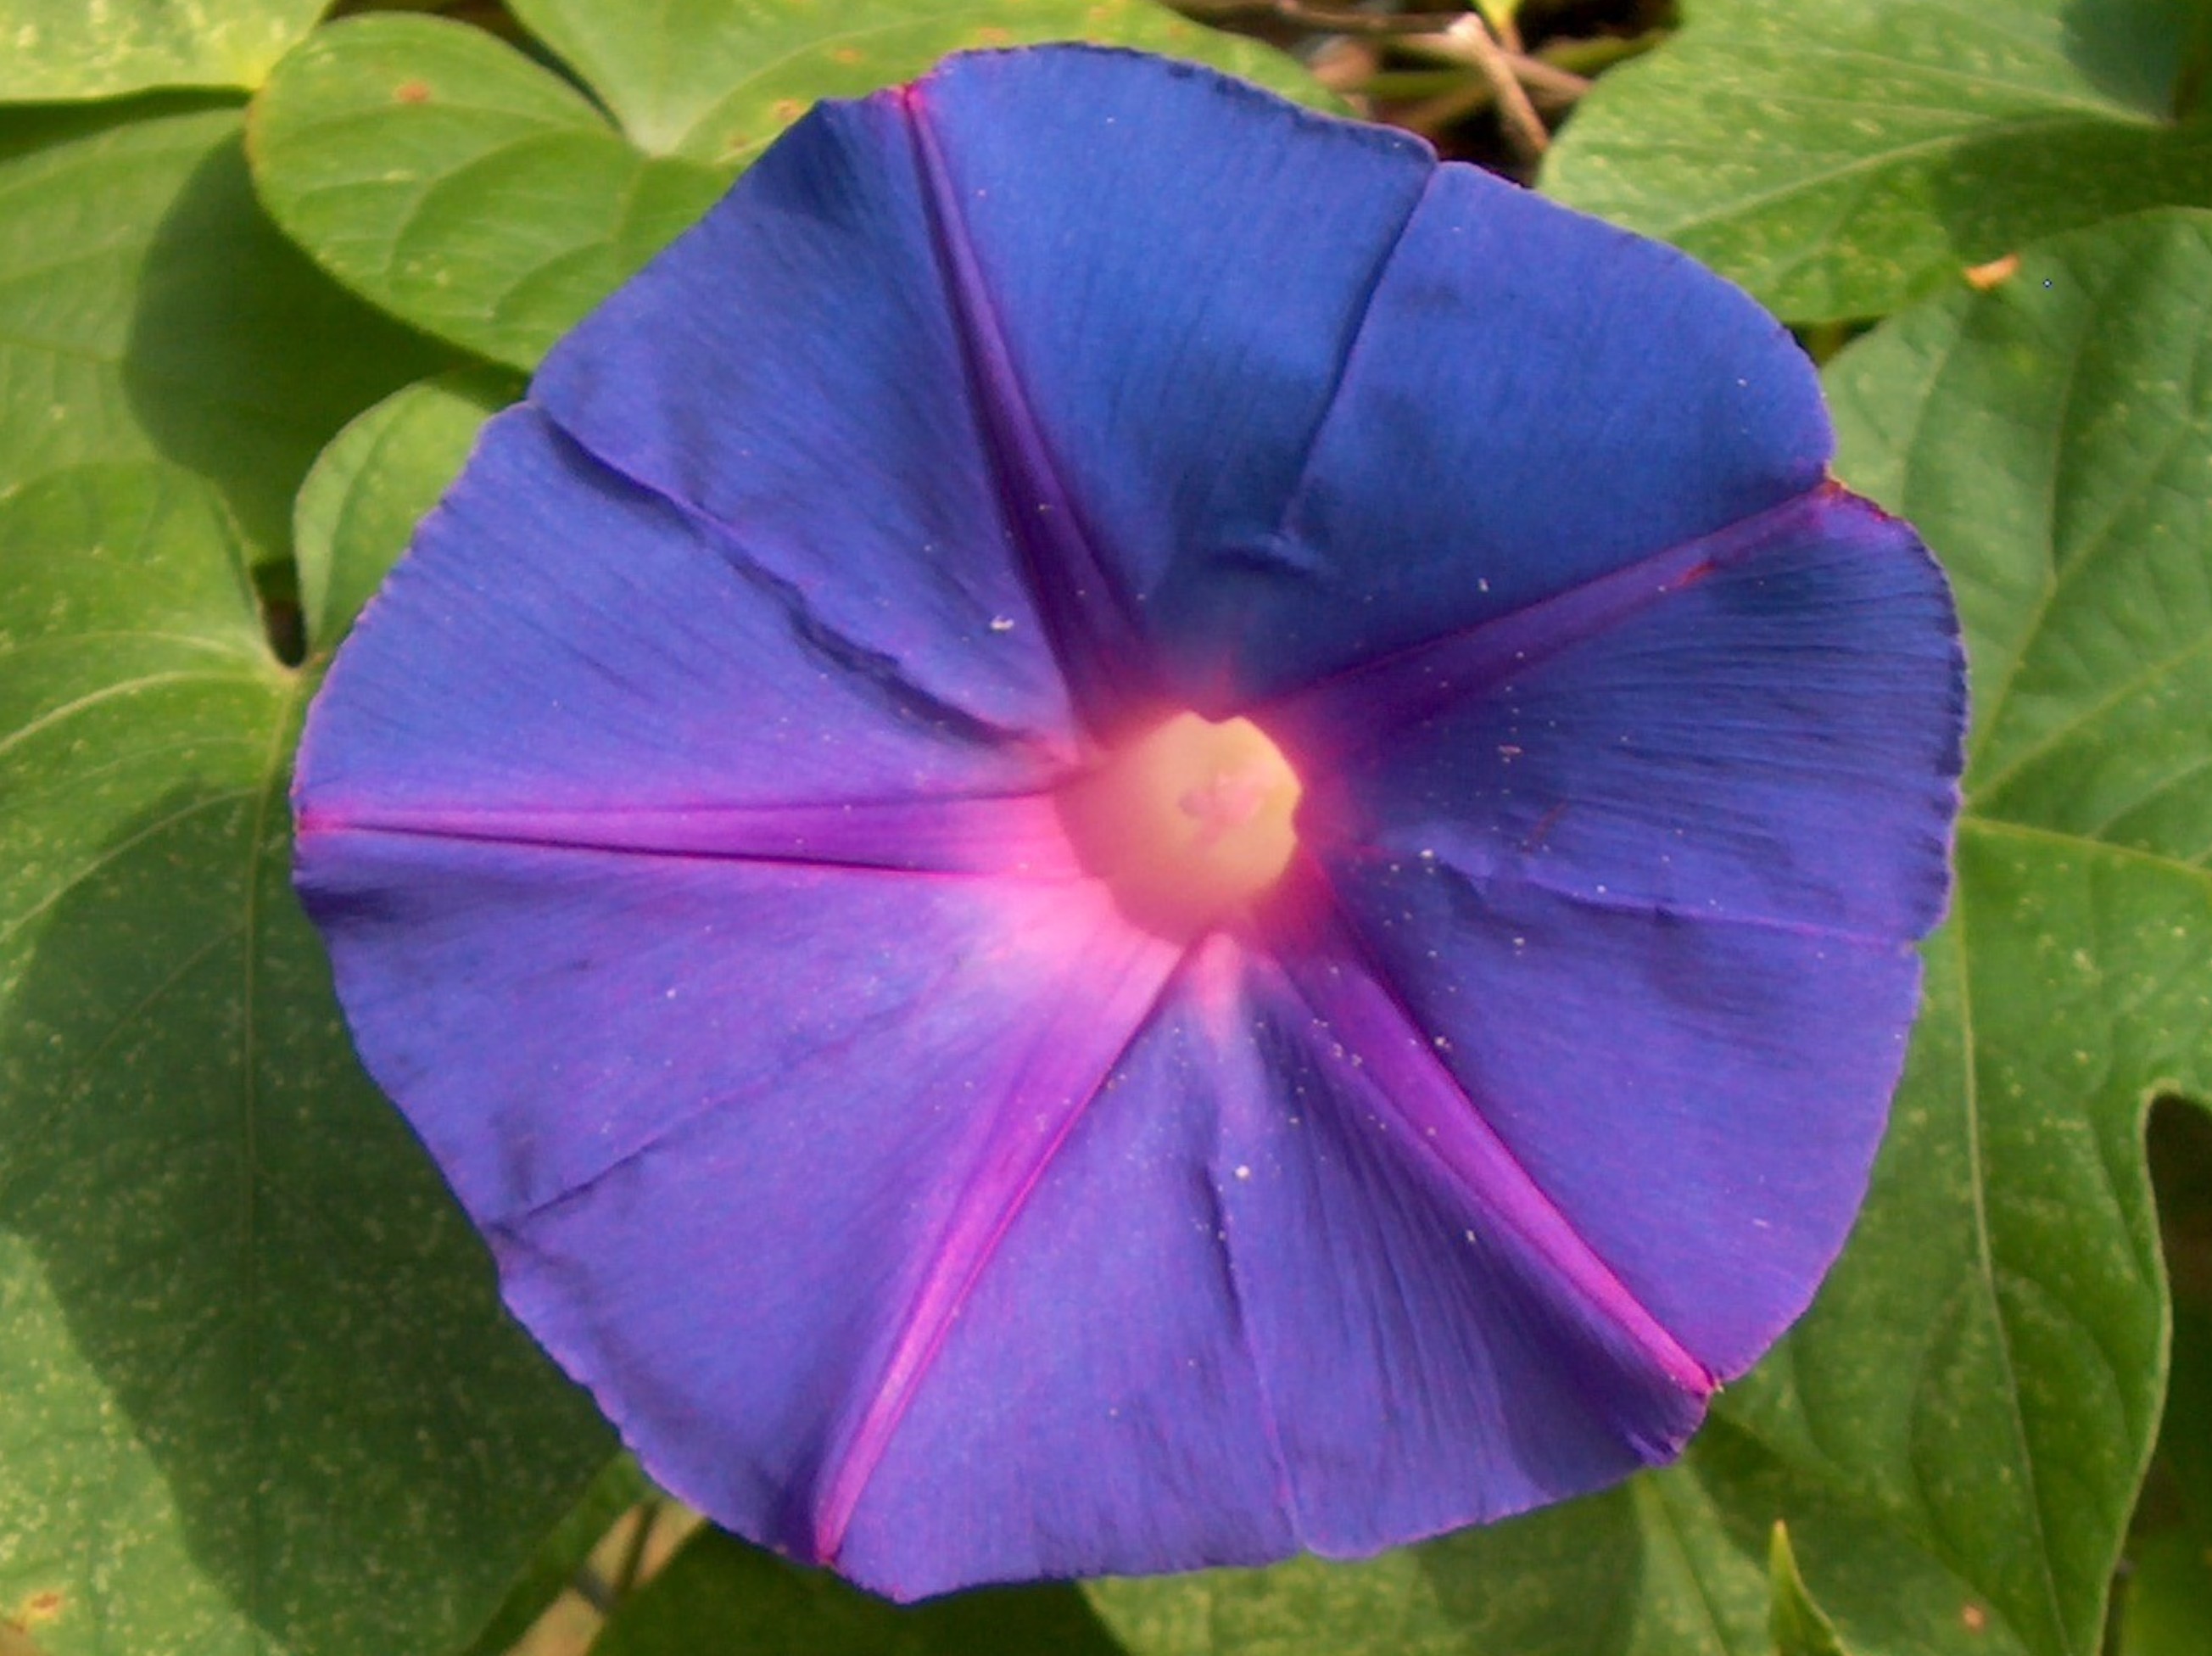 Ipomoea purpurea / Morning Glory